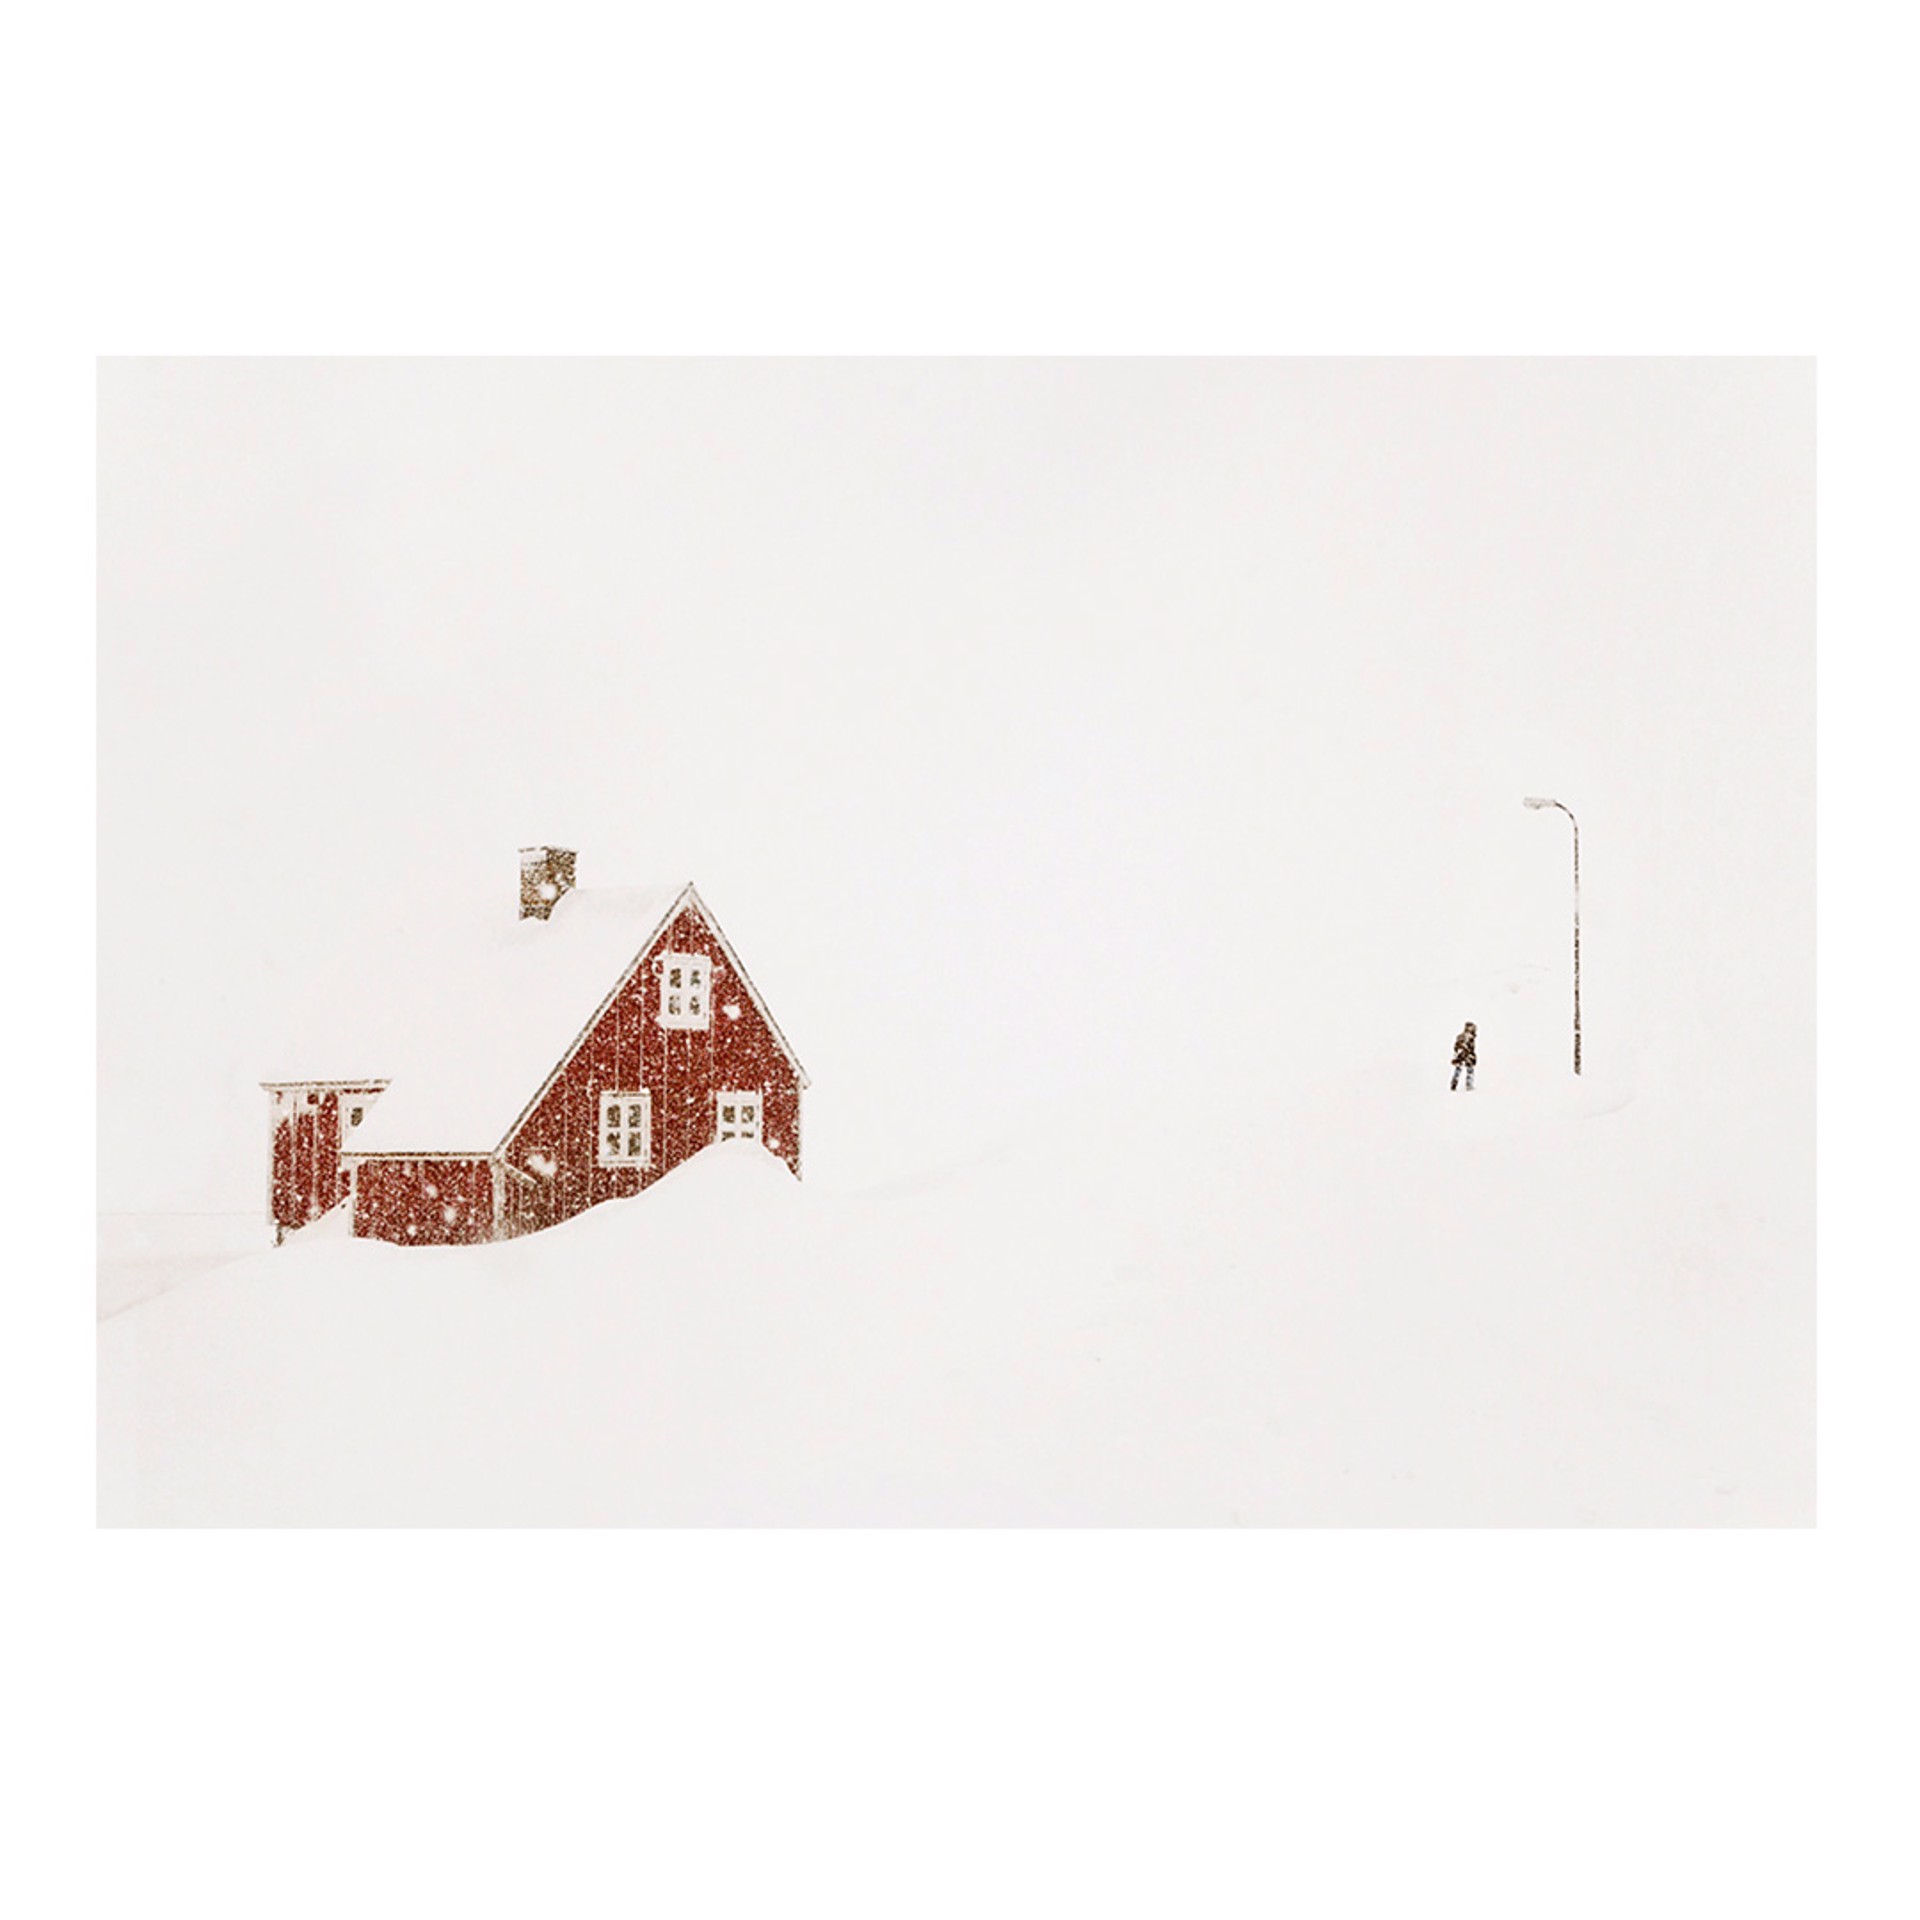 La Maison Rouge (Greenland) by Christophe Jacrot